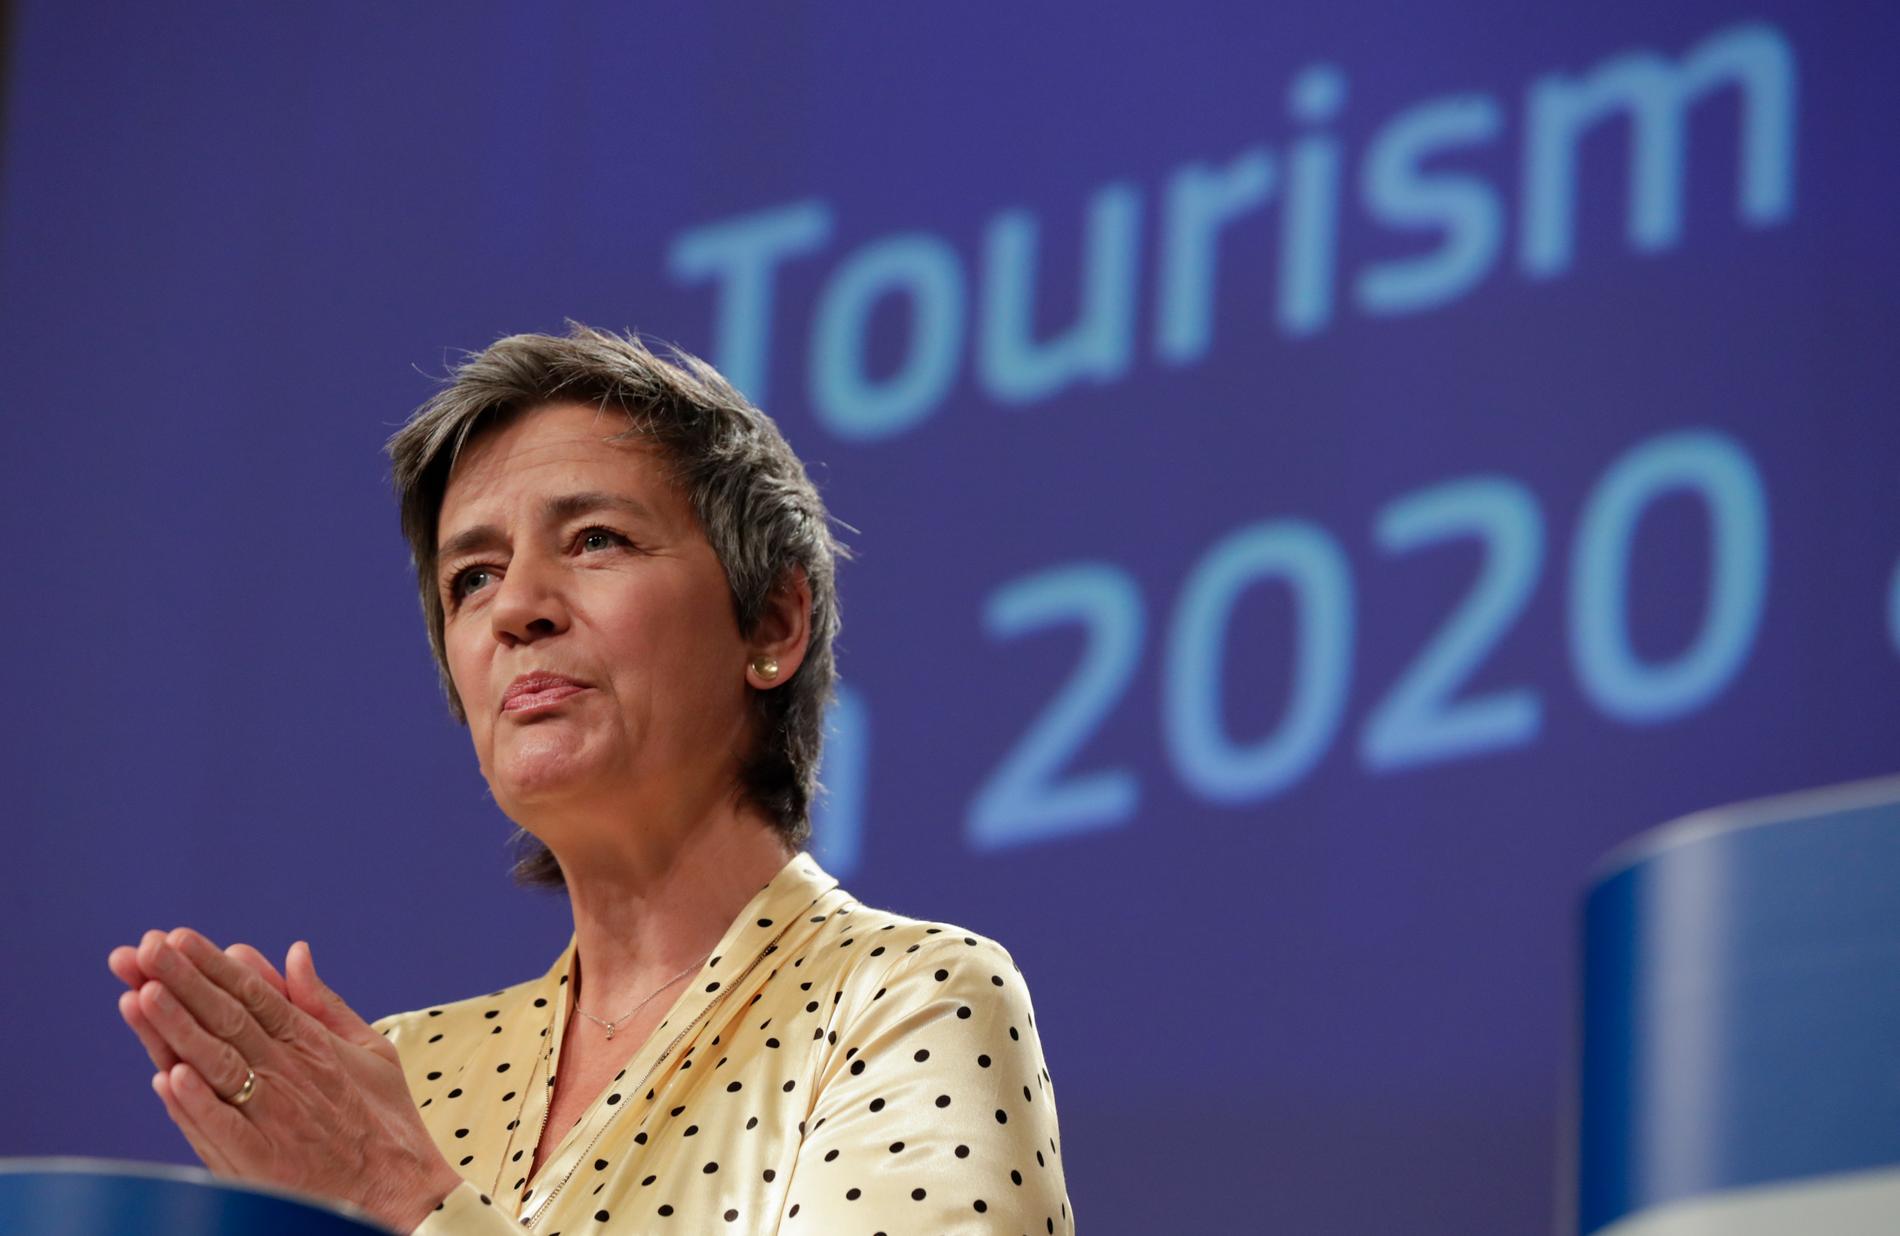 EU:s digitaliseringskommissionär Margrethe Vestager lägger fram riktlinjer om turismen efter coronakrisen.